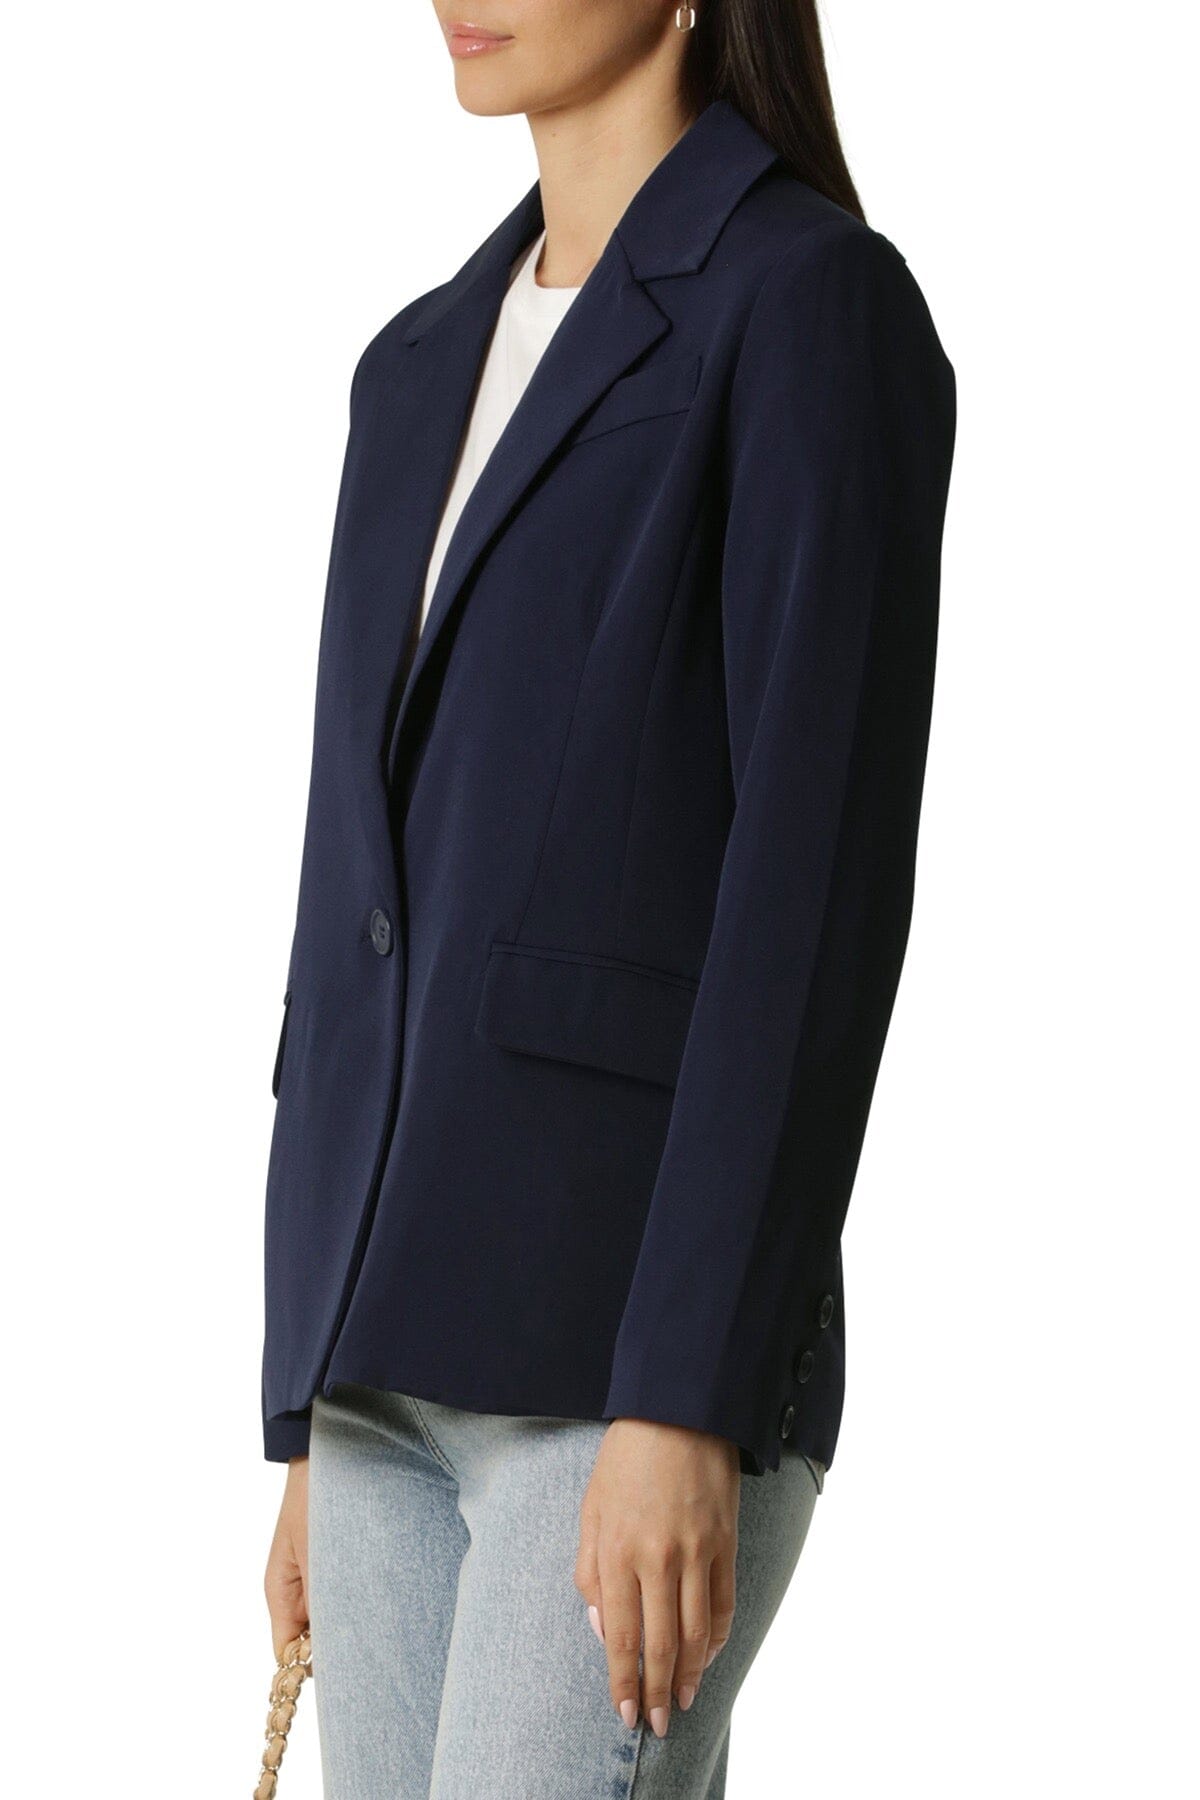 Single Button Stretch Suit Blazer Jacket Coat Navy Blue - Women's Flattering Office to Date Night Blazers Jackets